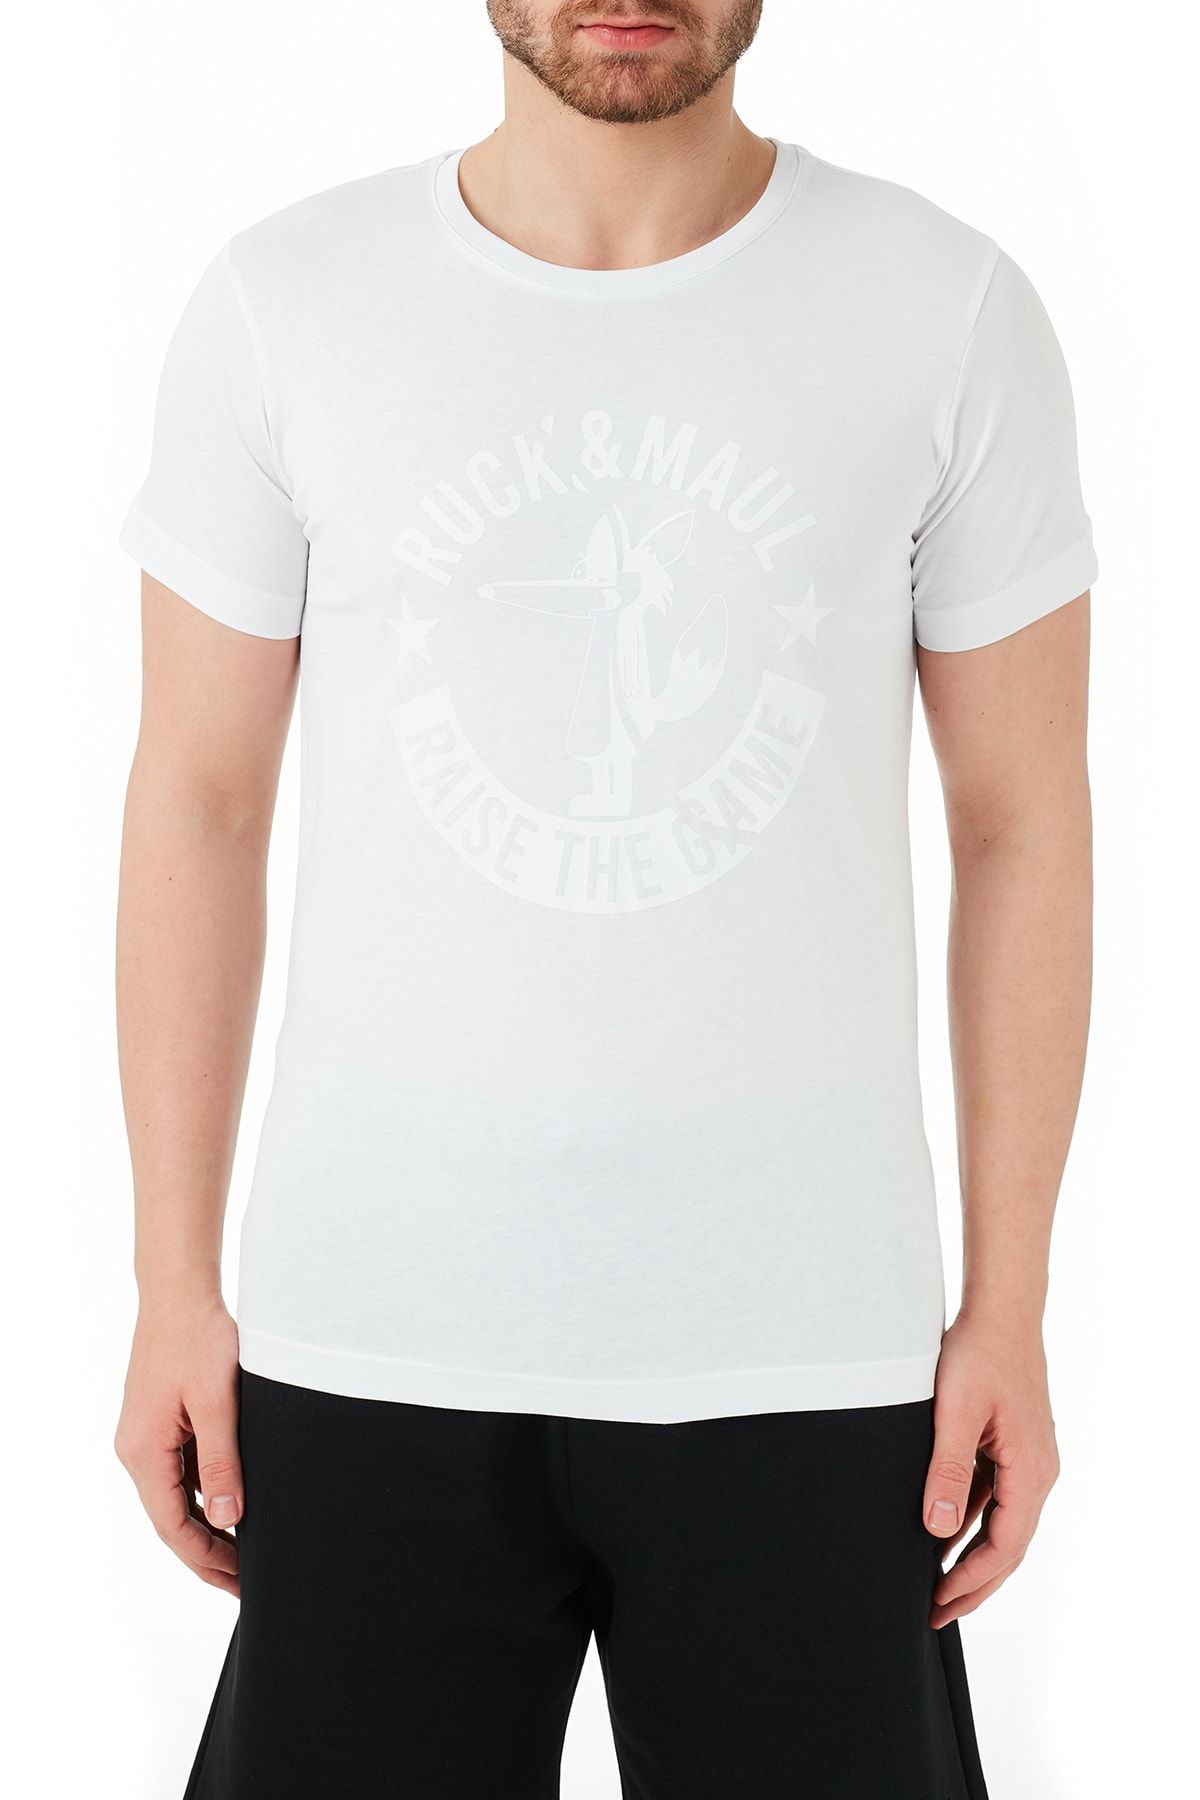 Ruck & Maul Erkek Beyaz Pamuklu Bisiklet Yaka T Shirt Rmm03000723